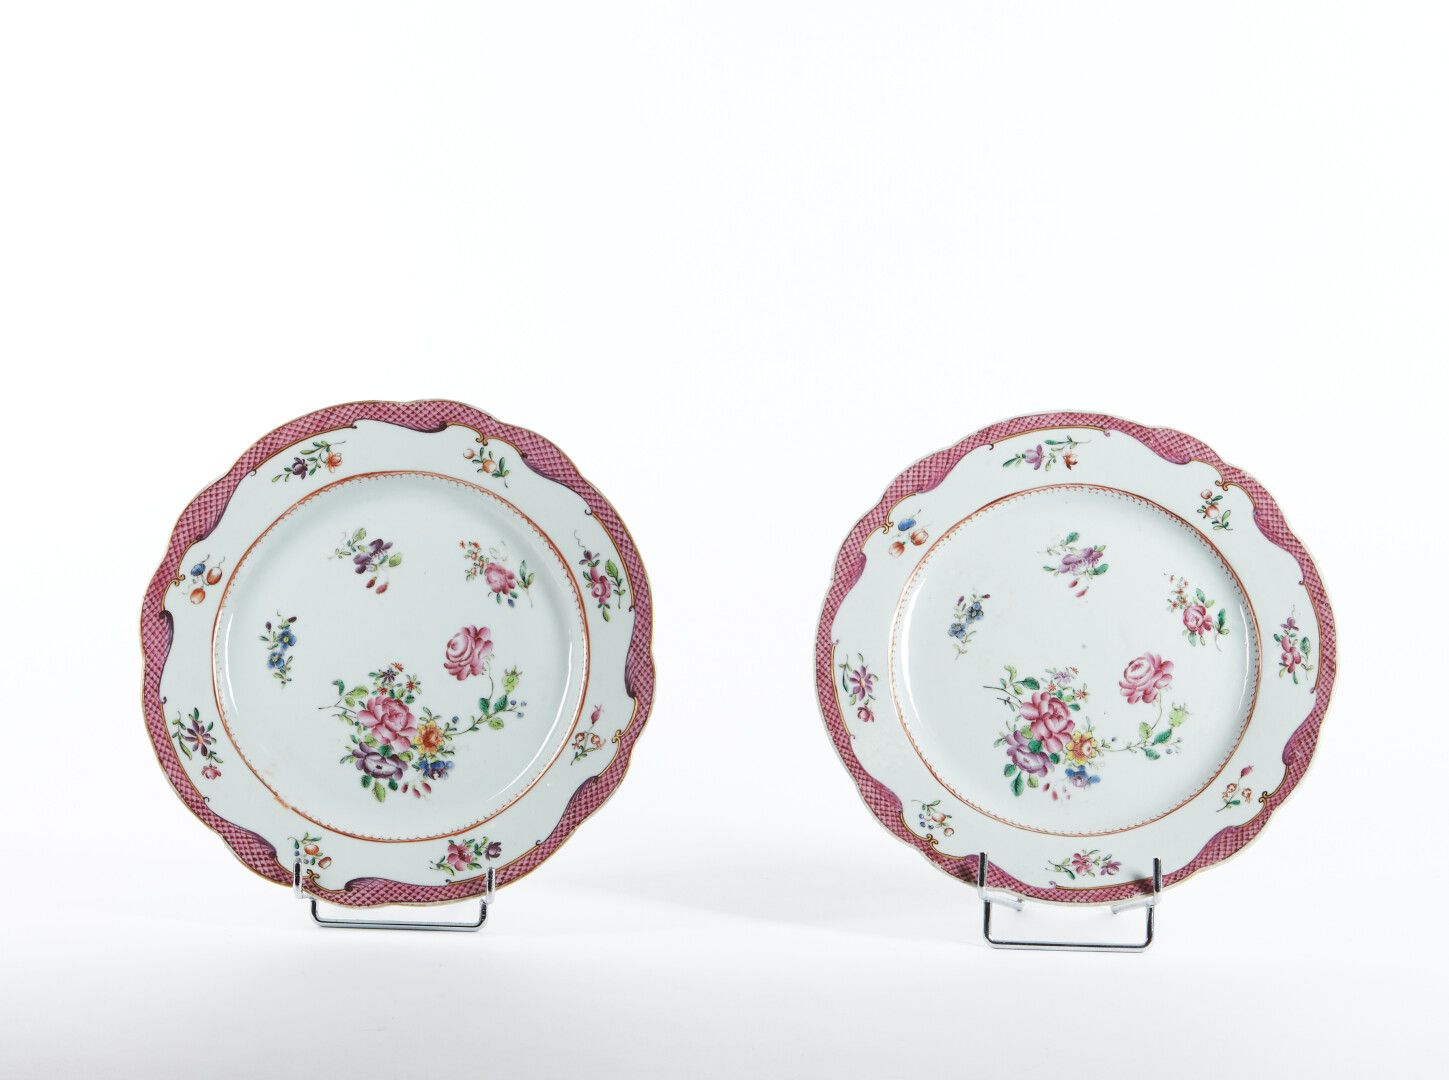 Null 中国

一对边缘有轮廓的瓷盘，装饰有粉彩。

18世纪。

直径：23厘米。